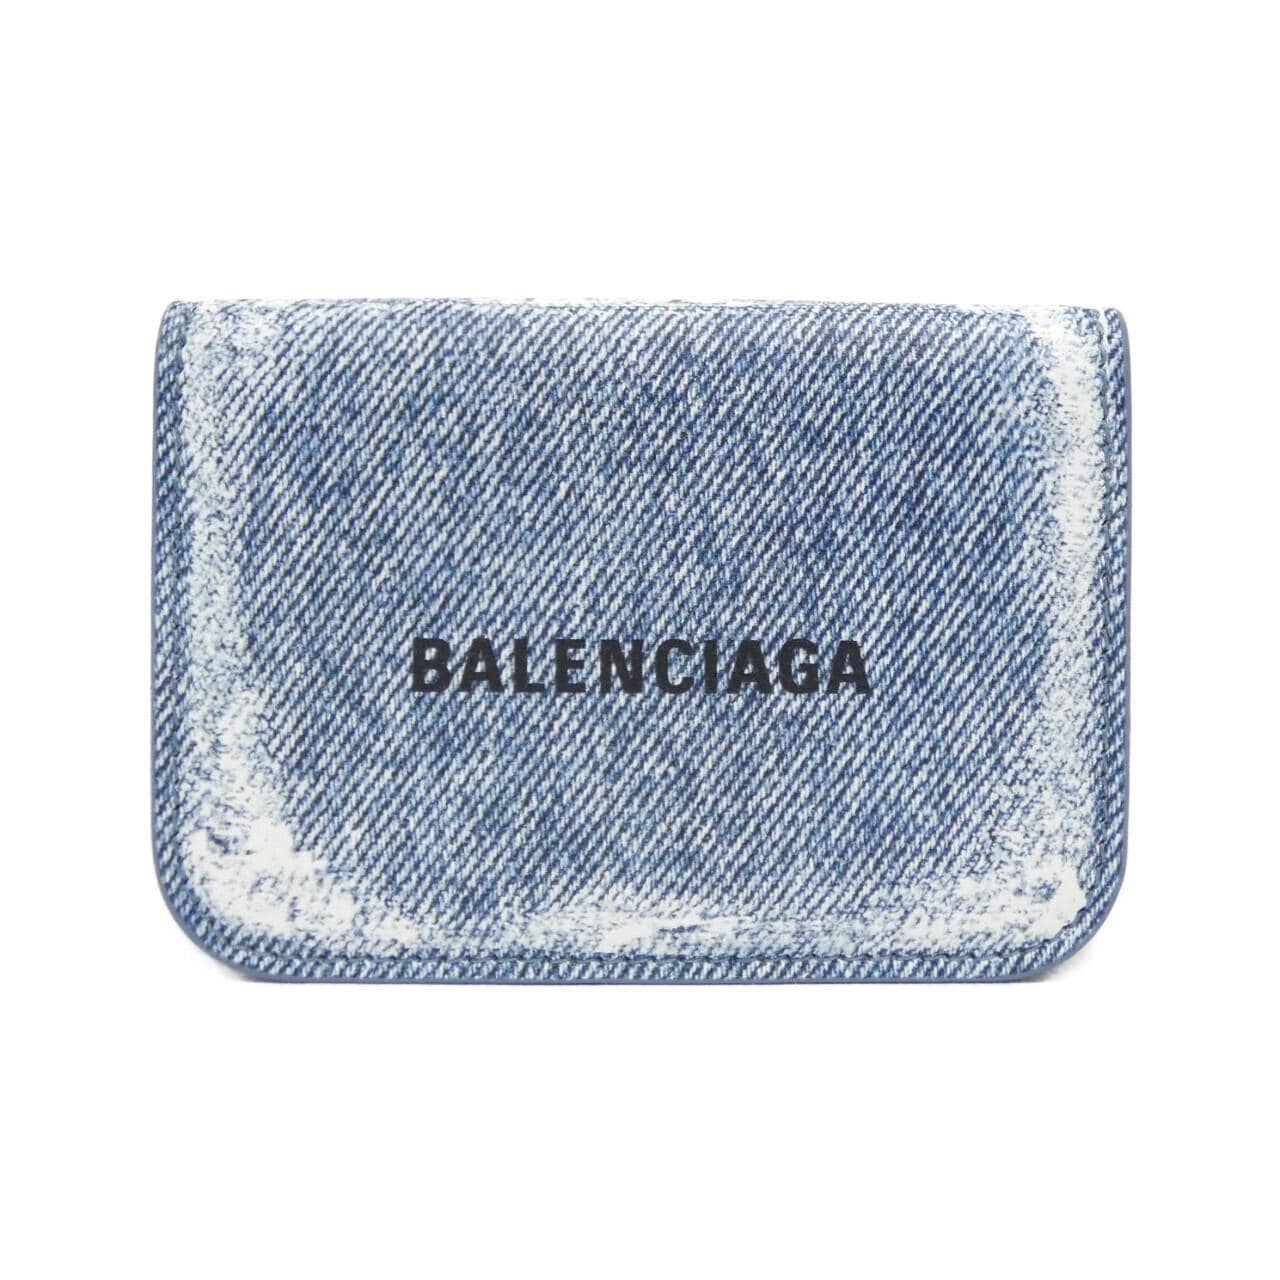 BALENCIAGA Cash Mini Wallet 593813 2AAFY Wallet